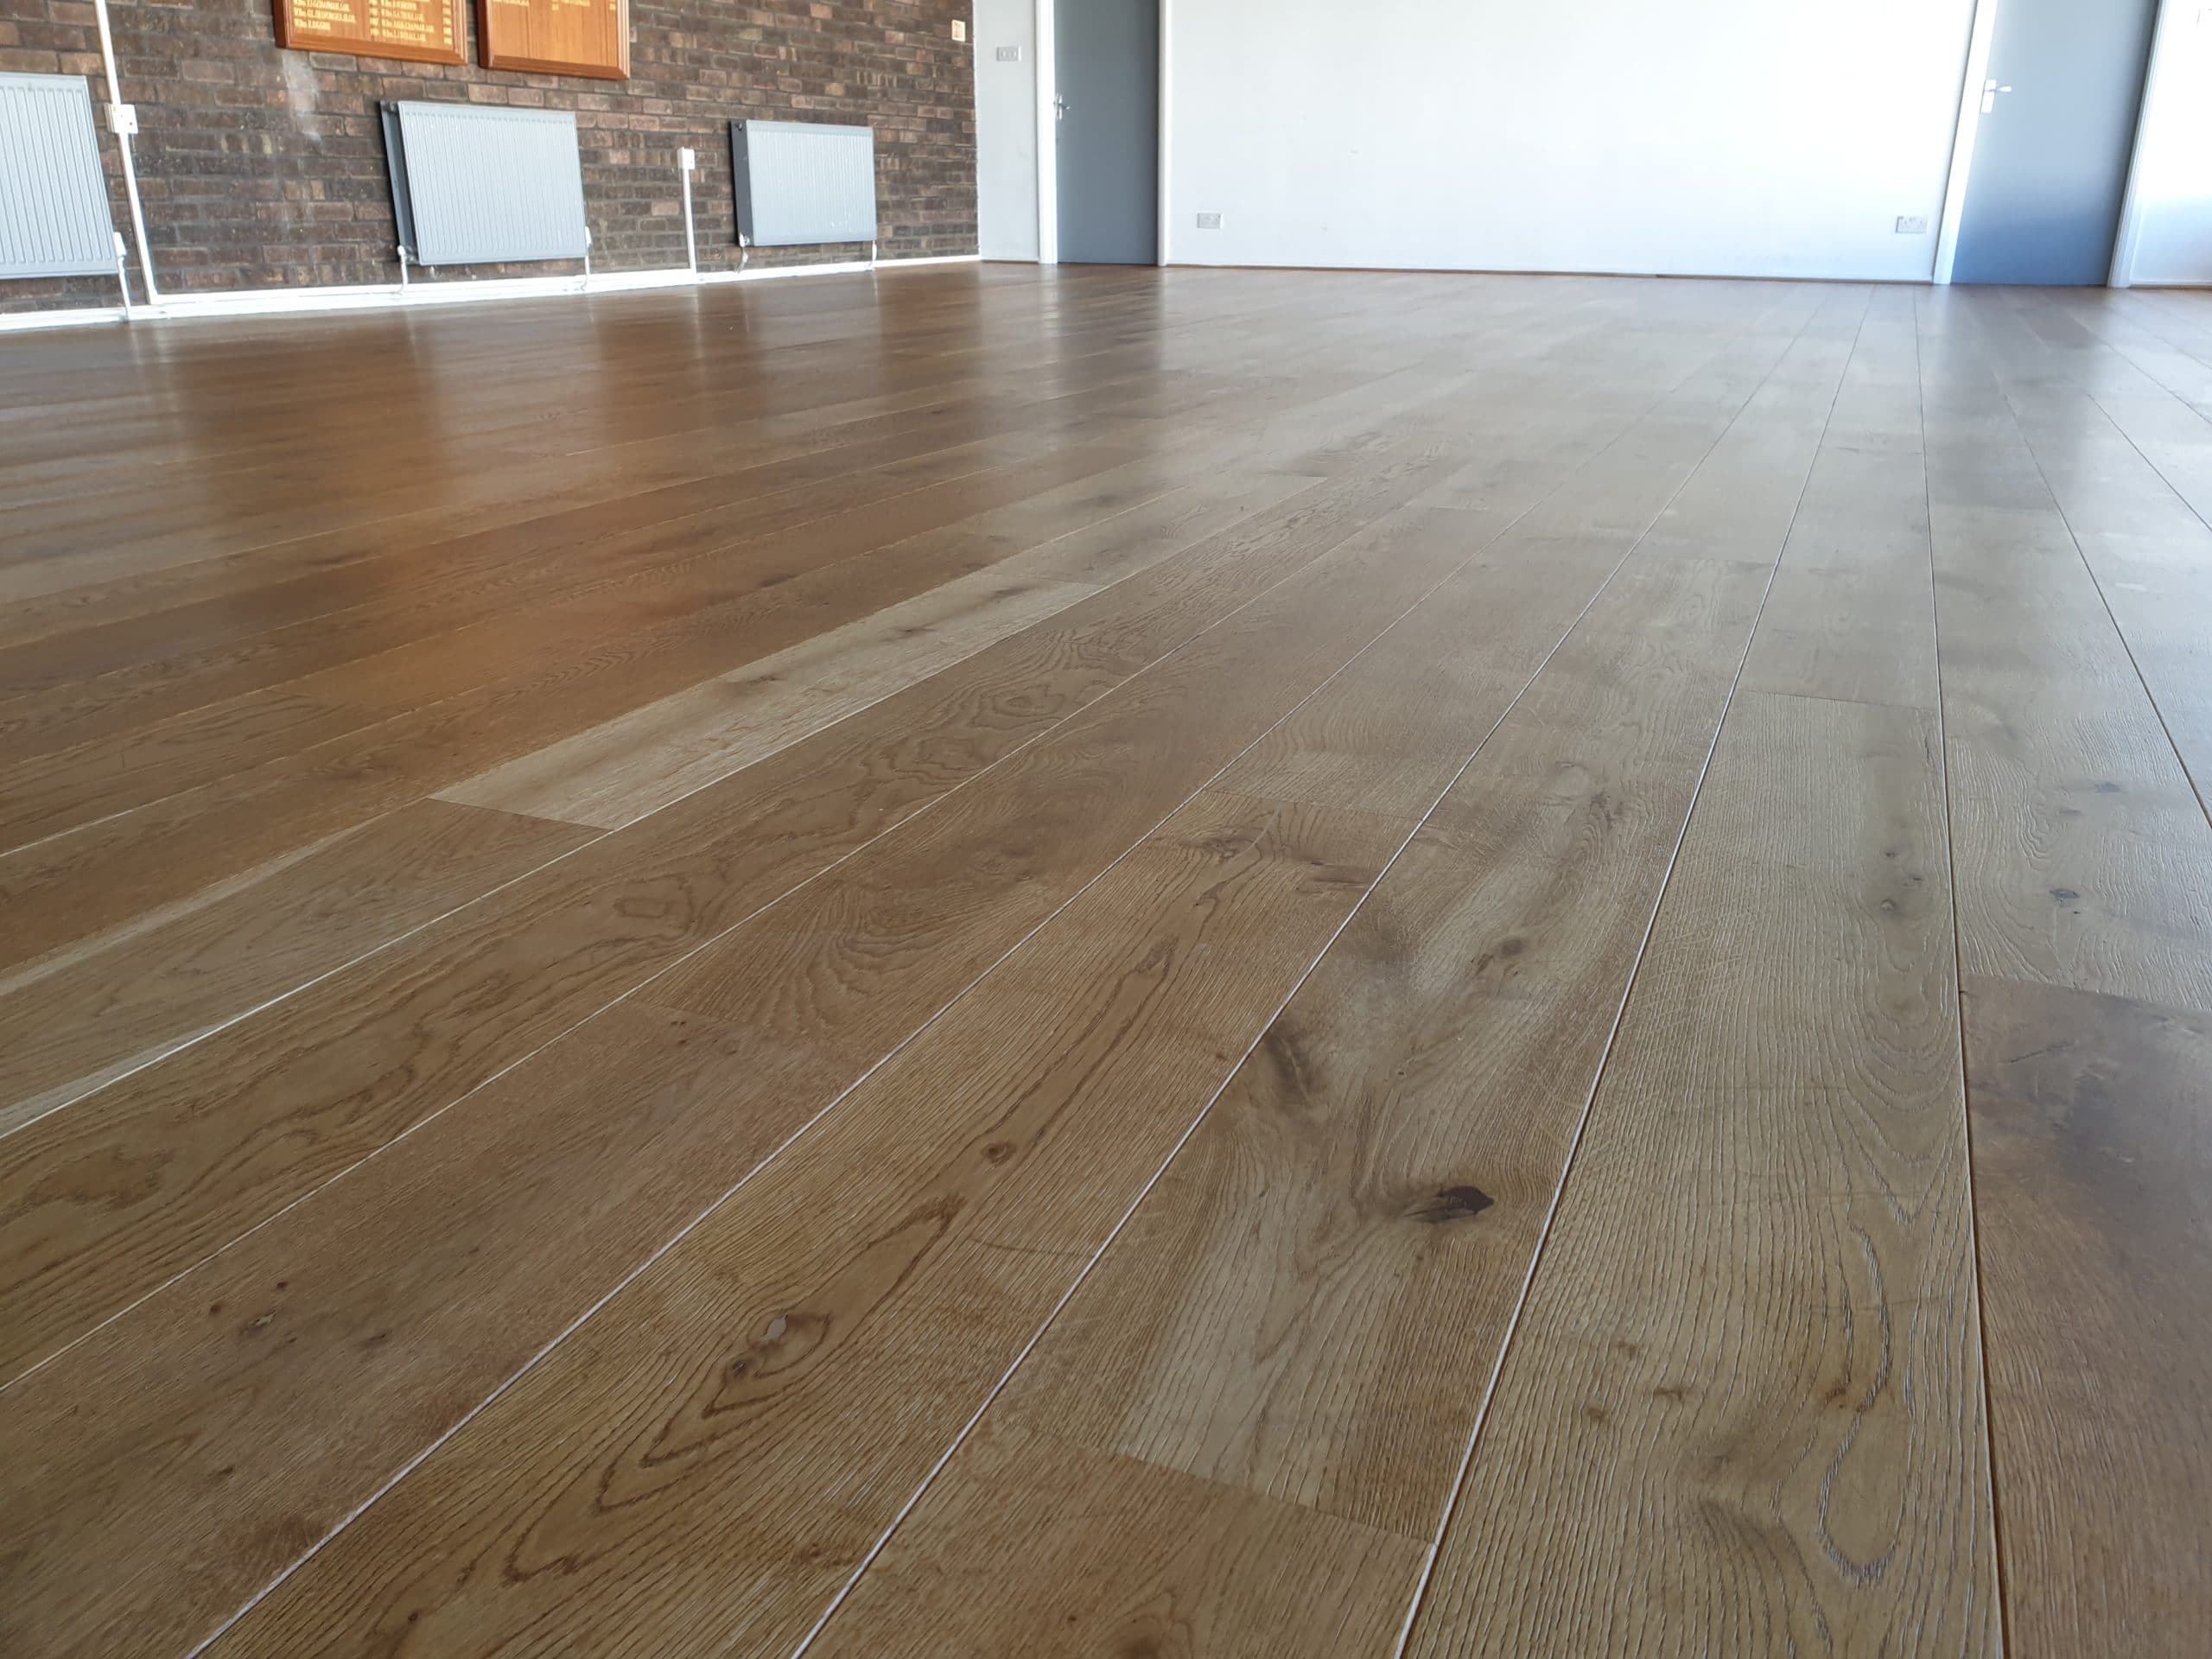 Wood Floor Finishing Solutions - Restore Floor Sanders